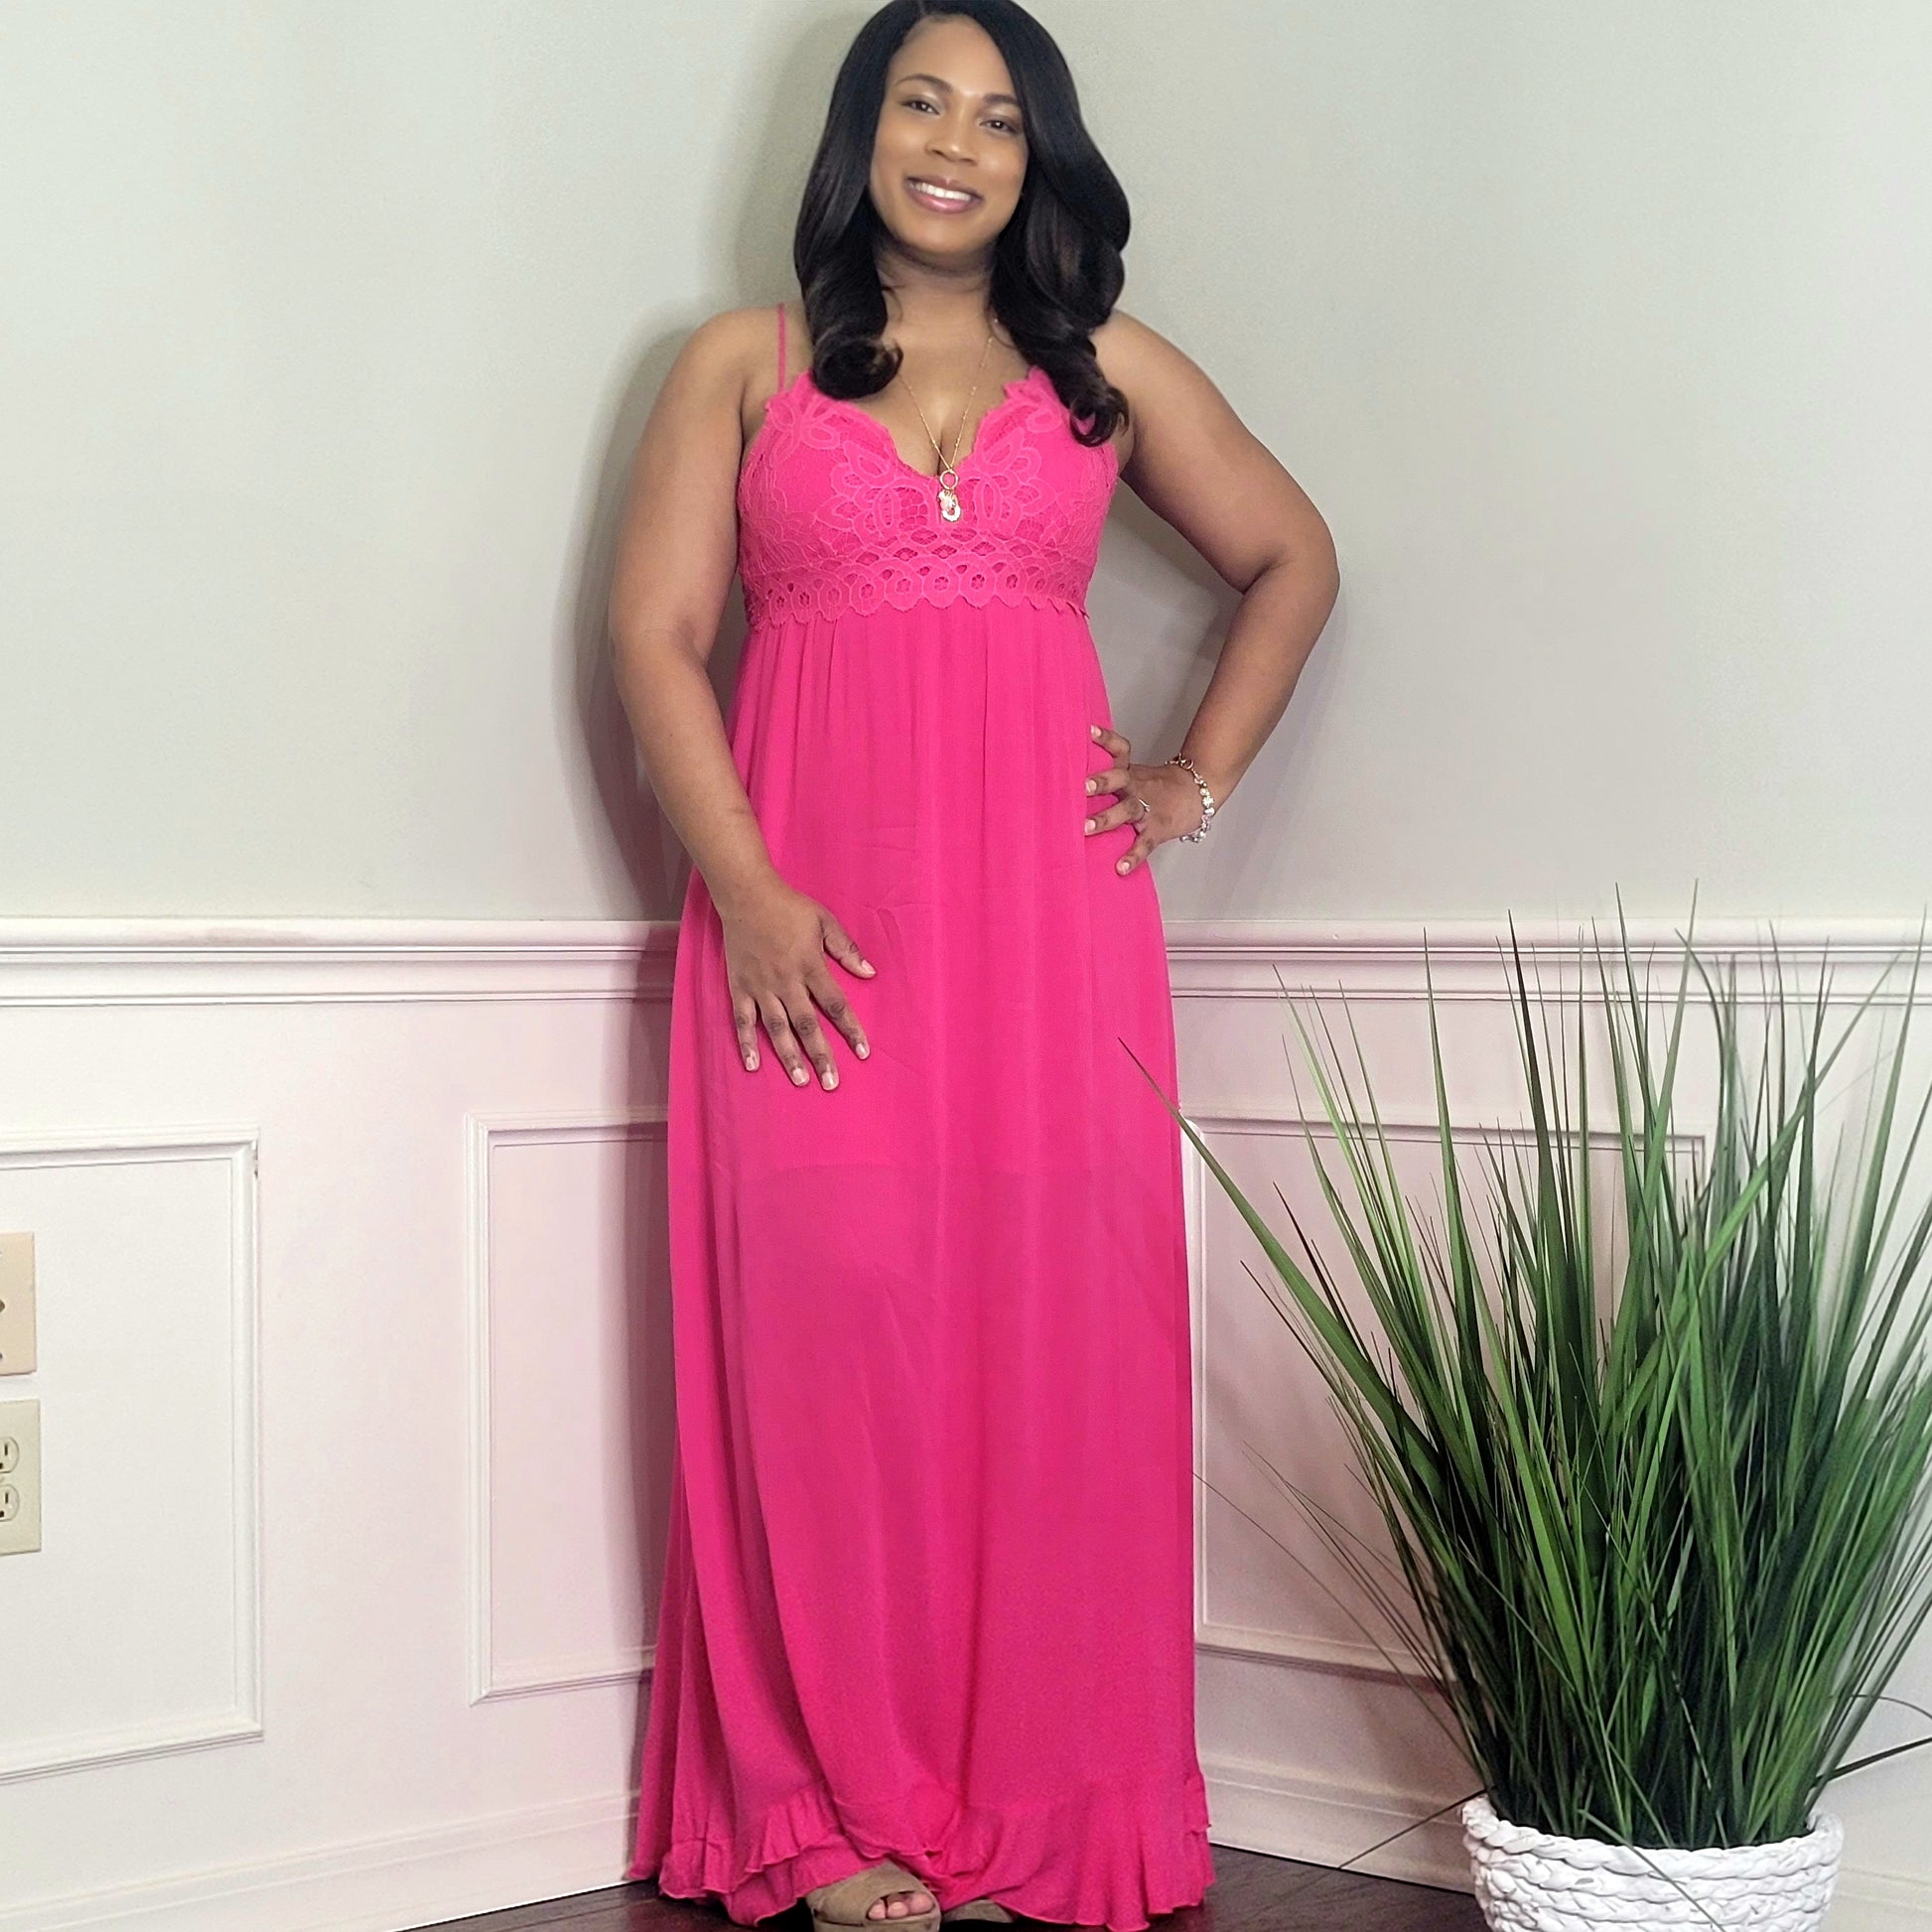 Model wearing a pink crochet top spaghetti strap dress front view